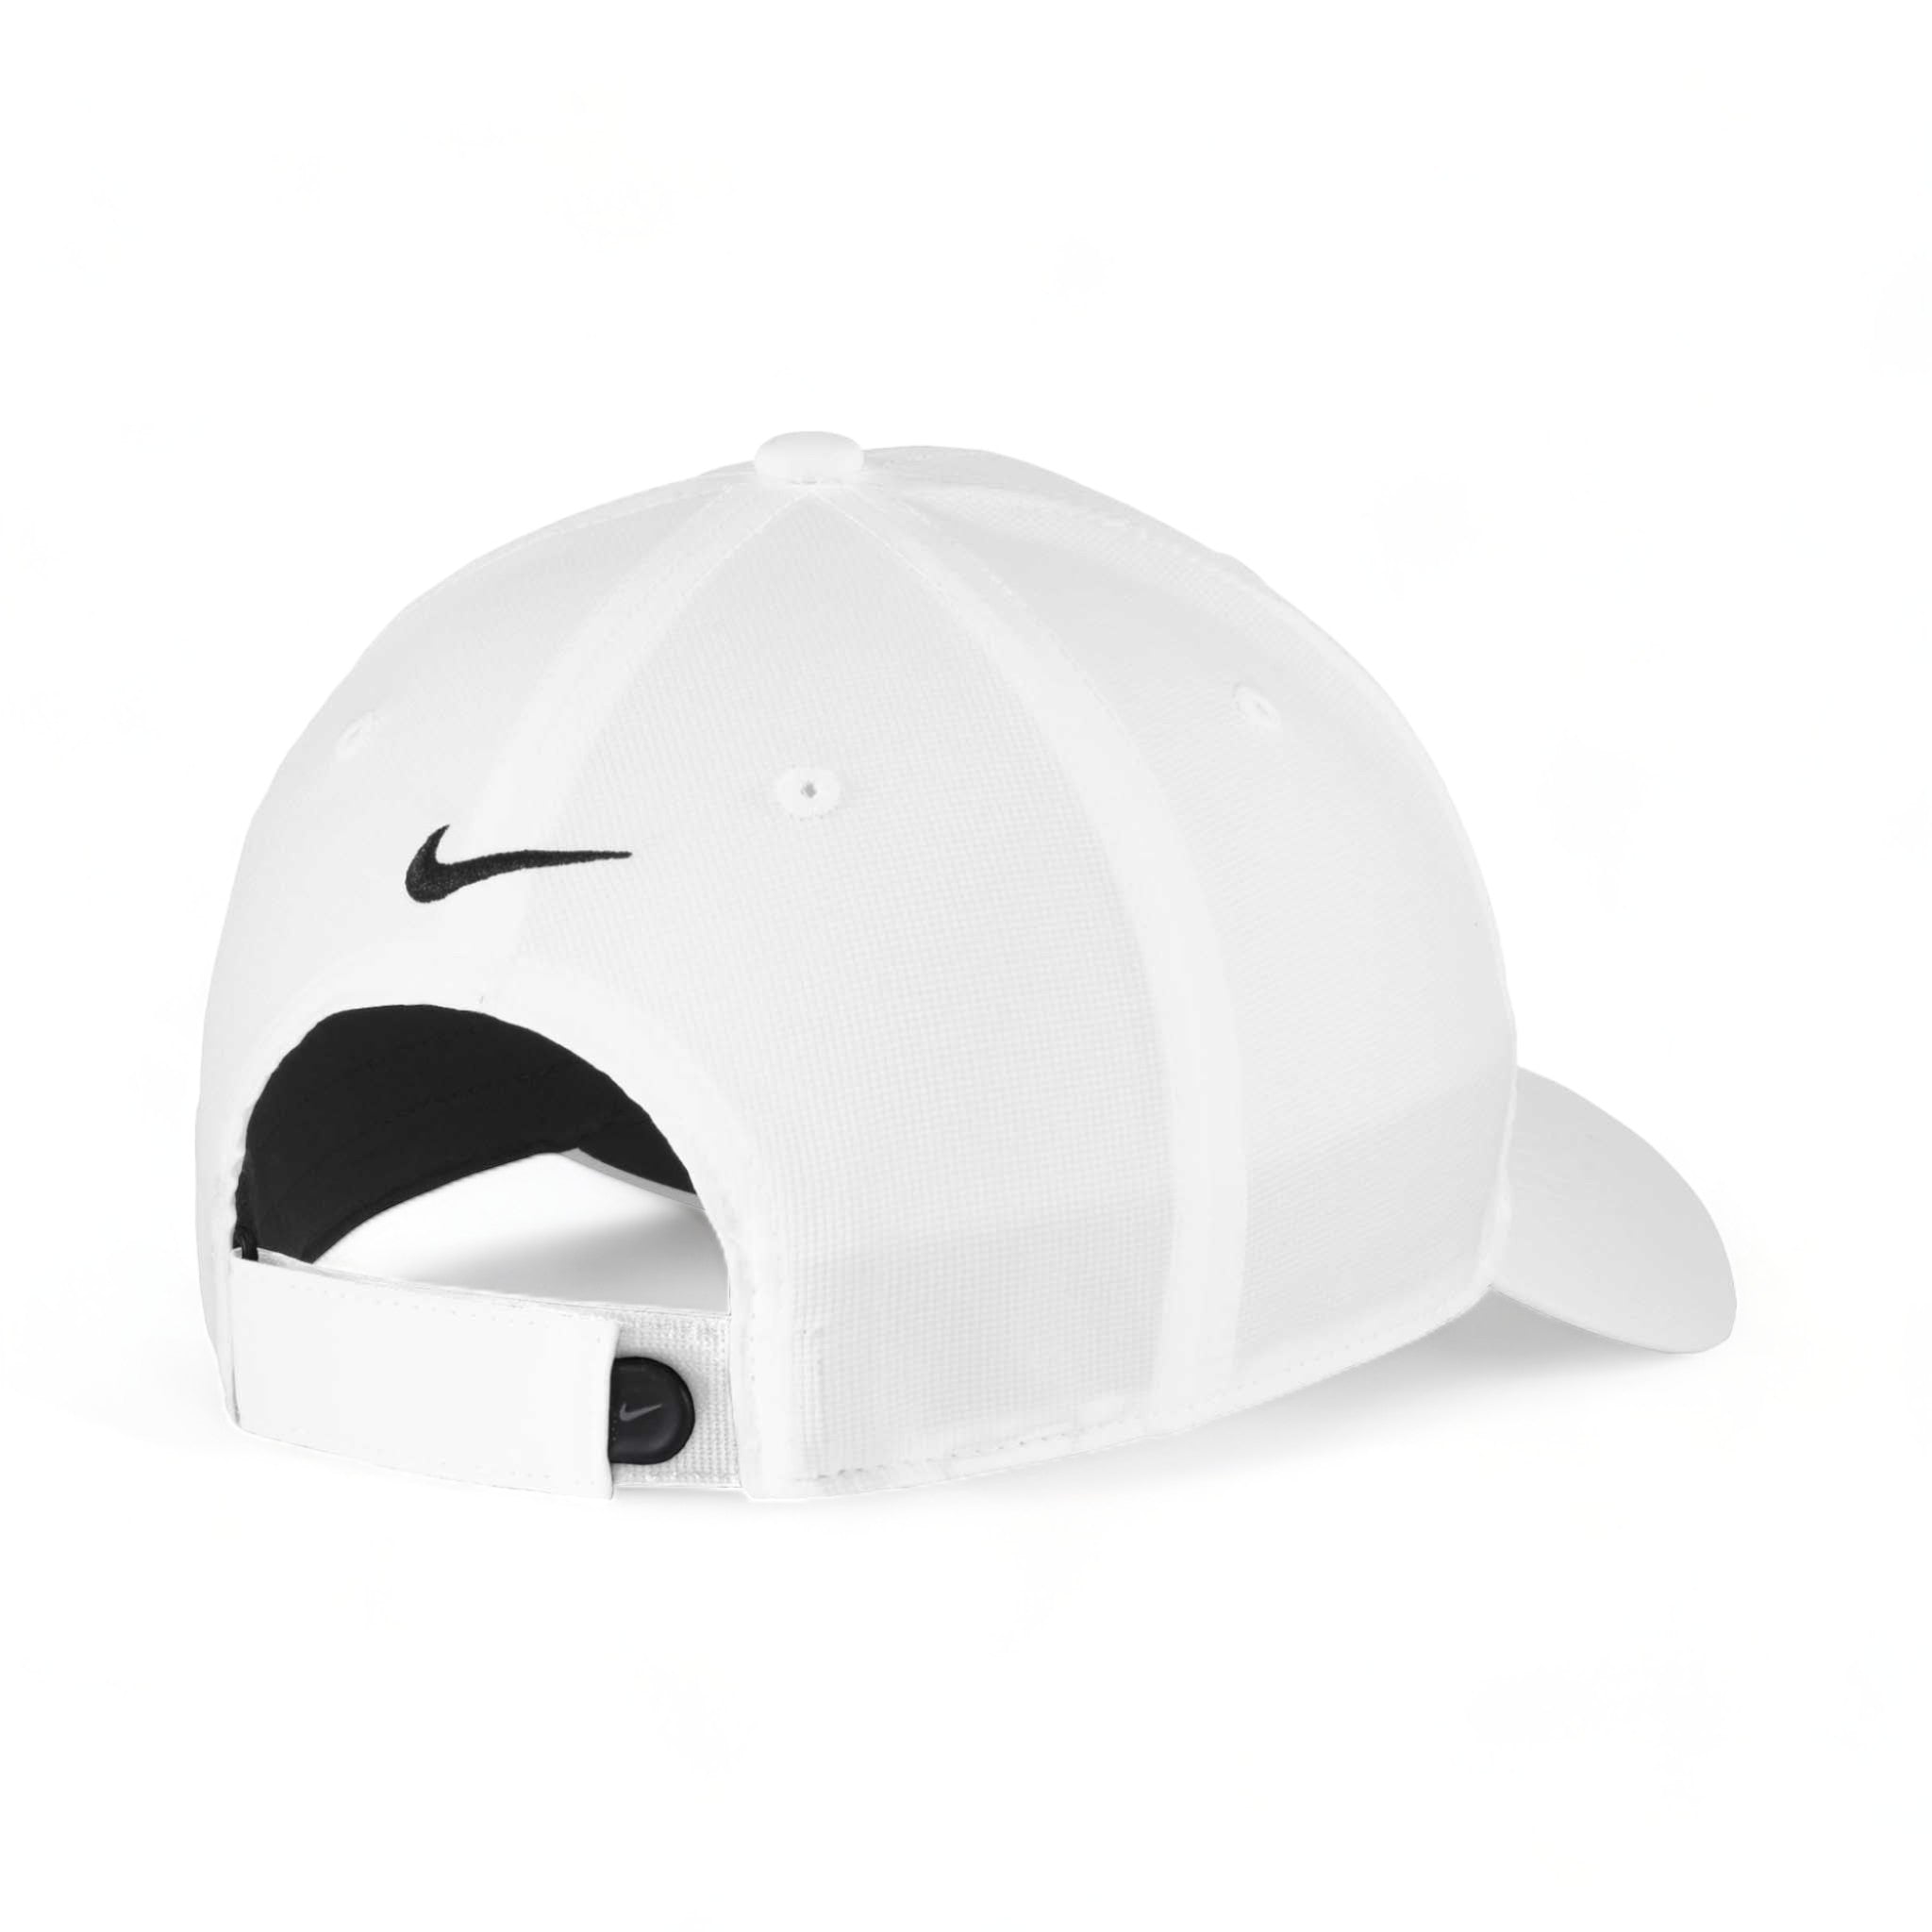 Back view of Nike NKFB6444 custom hat in white